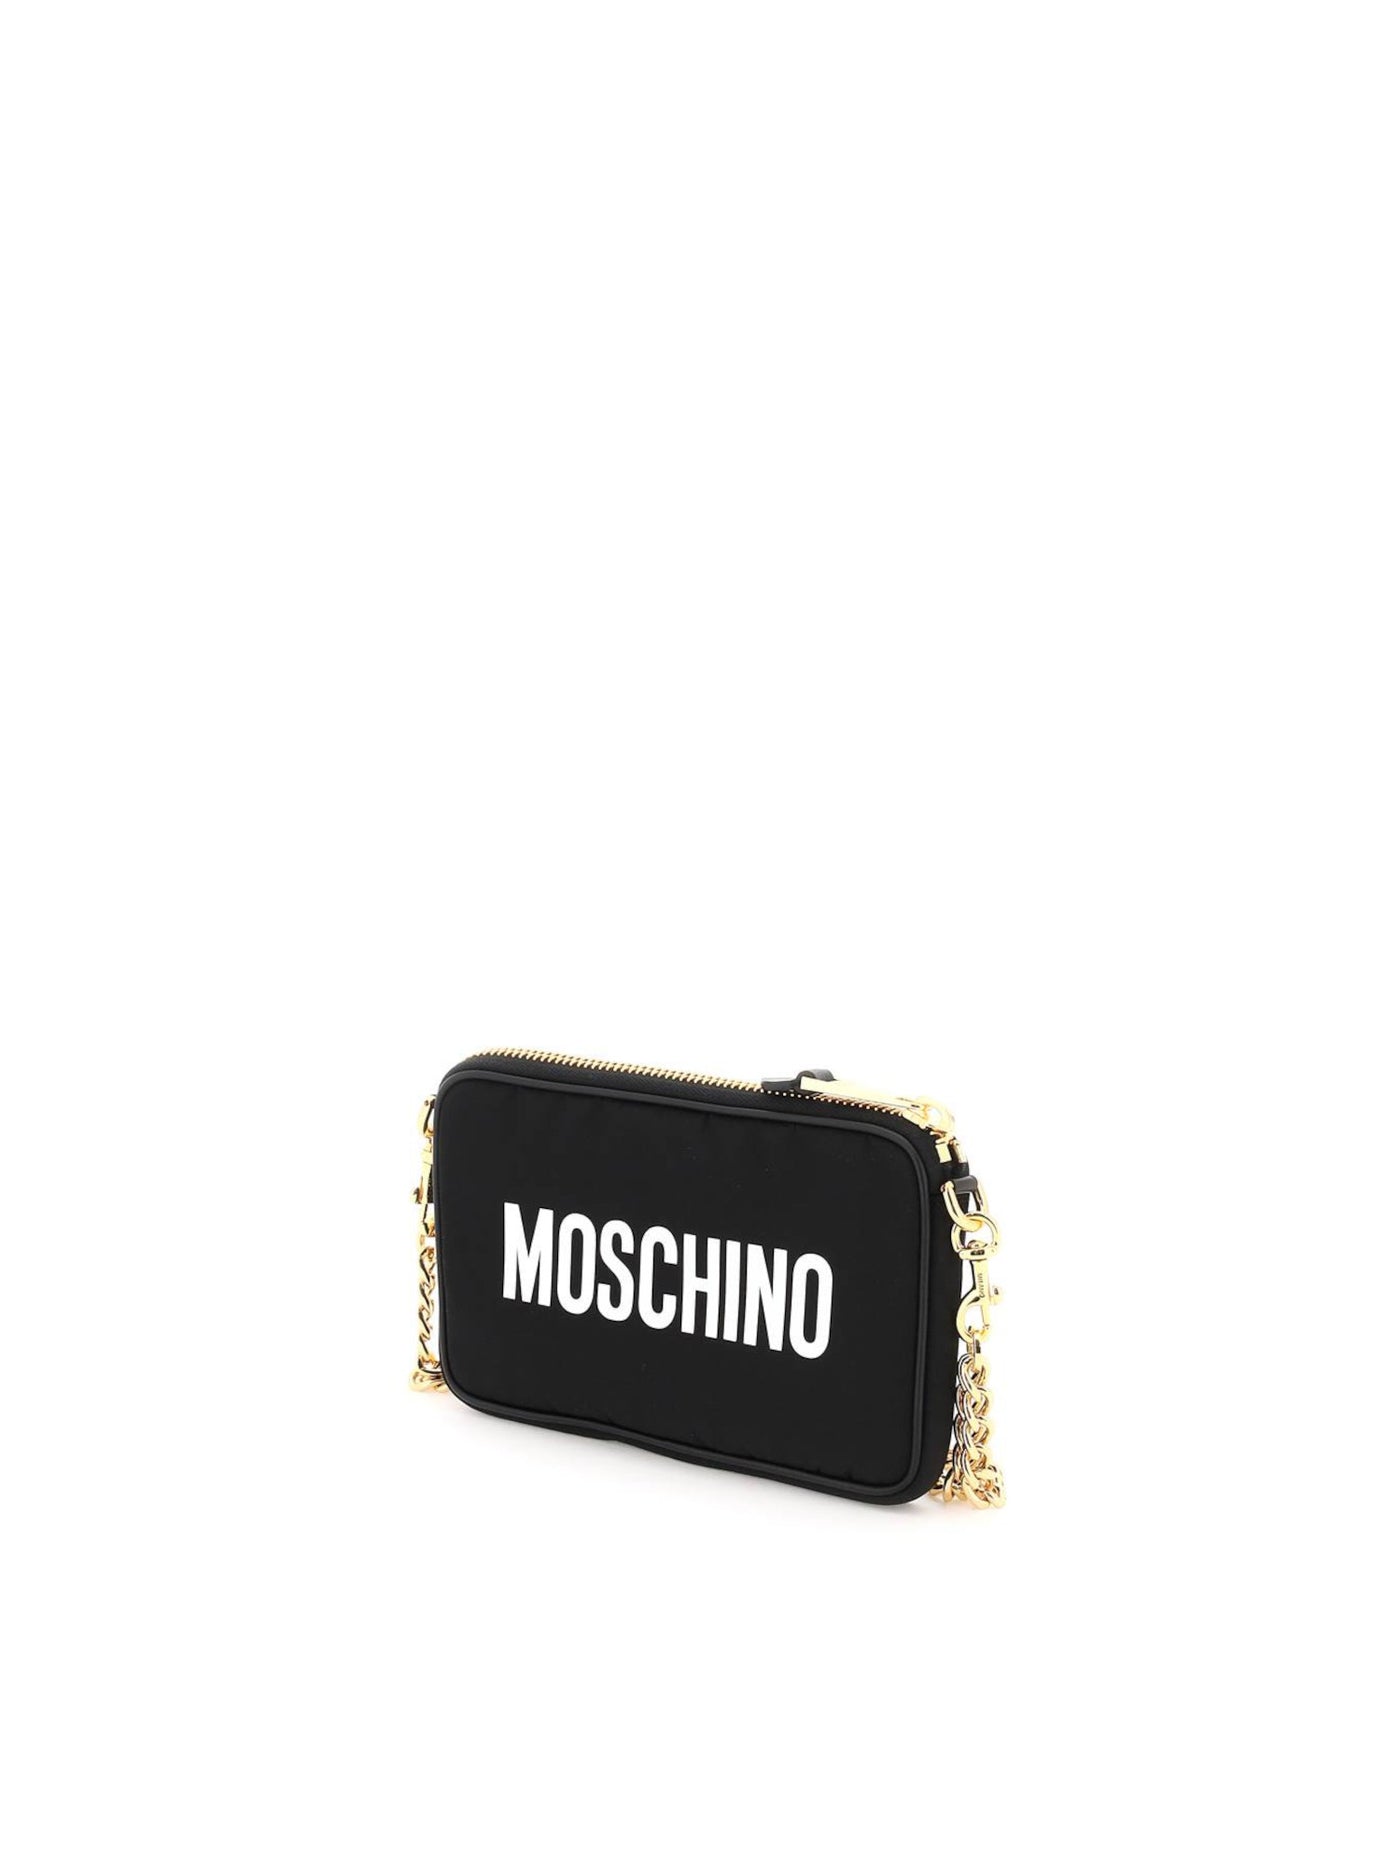 MOSCHINO Women's Black Teddy Bear Chain Strap Shoulder Bag